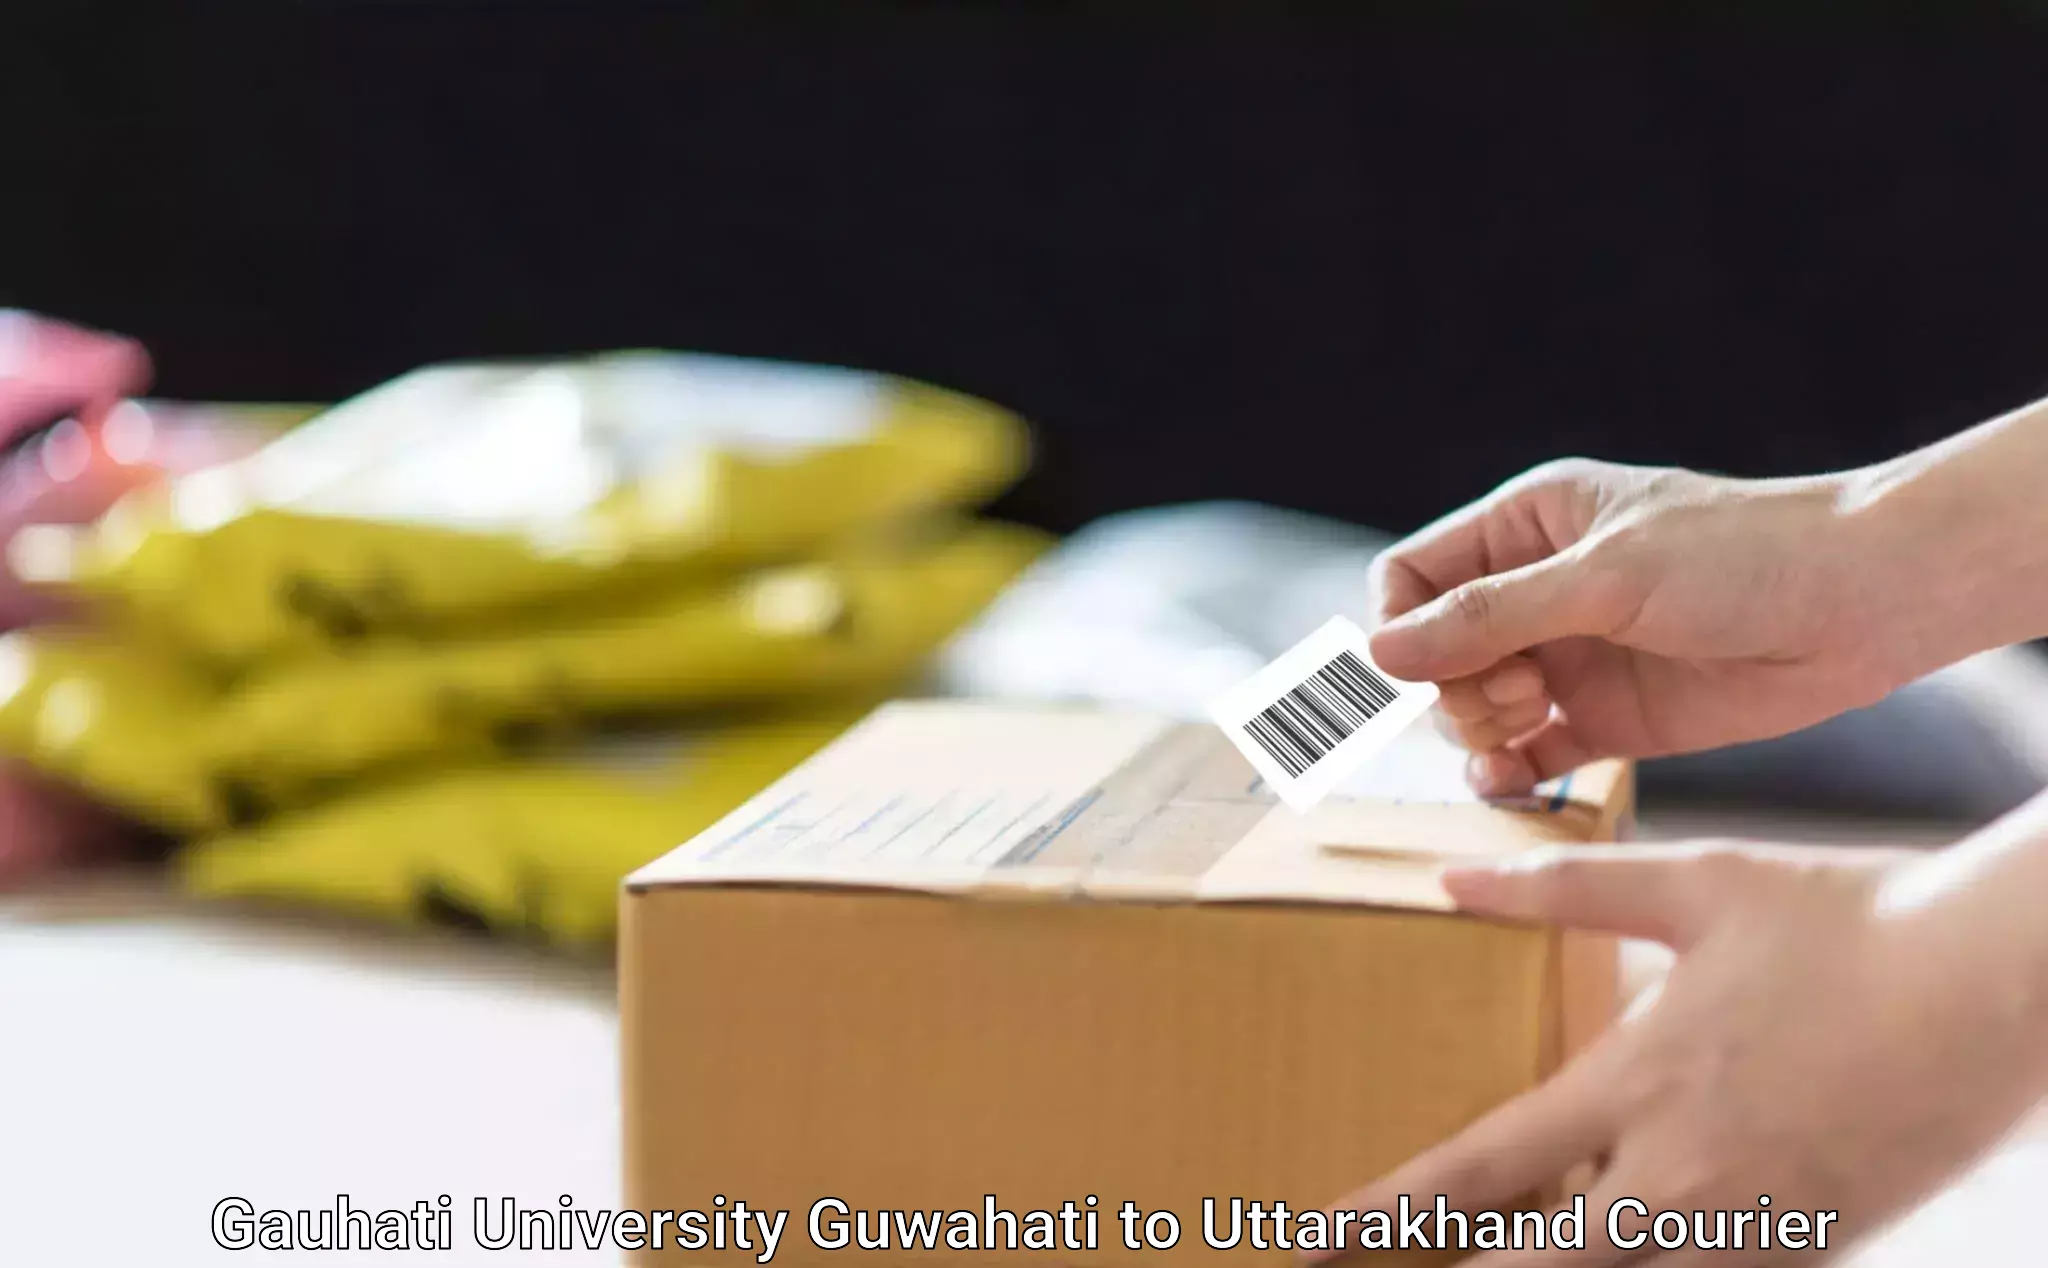 24-hour courier service Gauhati University Guwahati to Gopeshwar